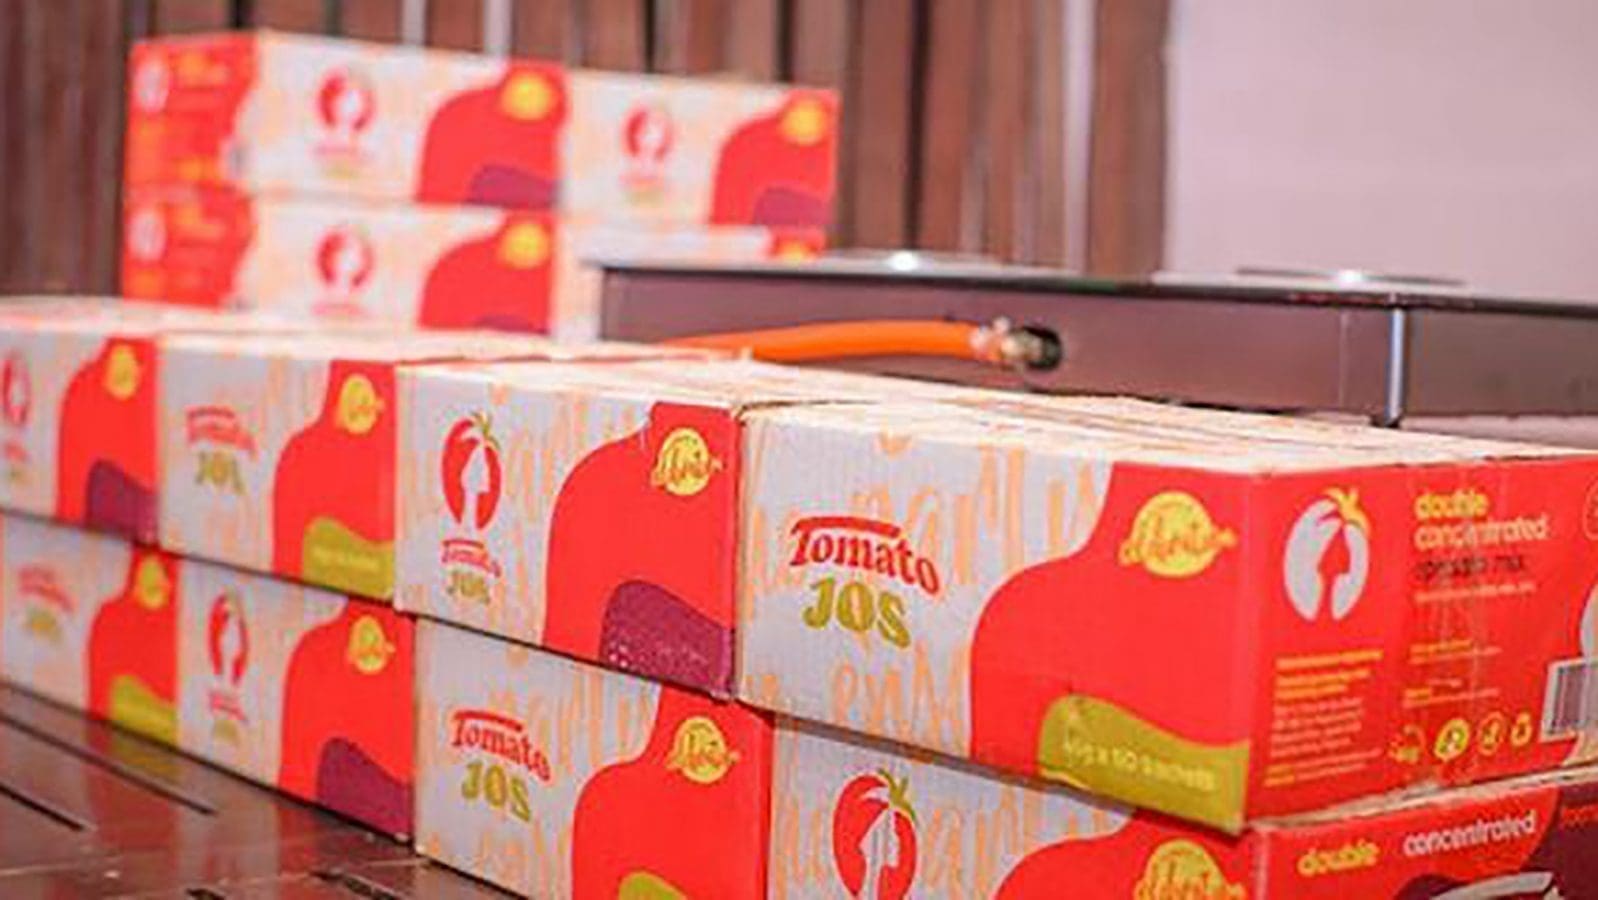 Investors backed Tomato Jos launches tomato paste in Nigerian market